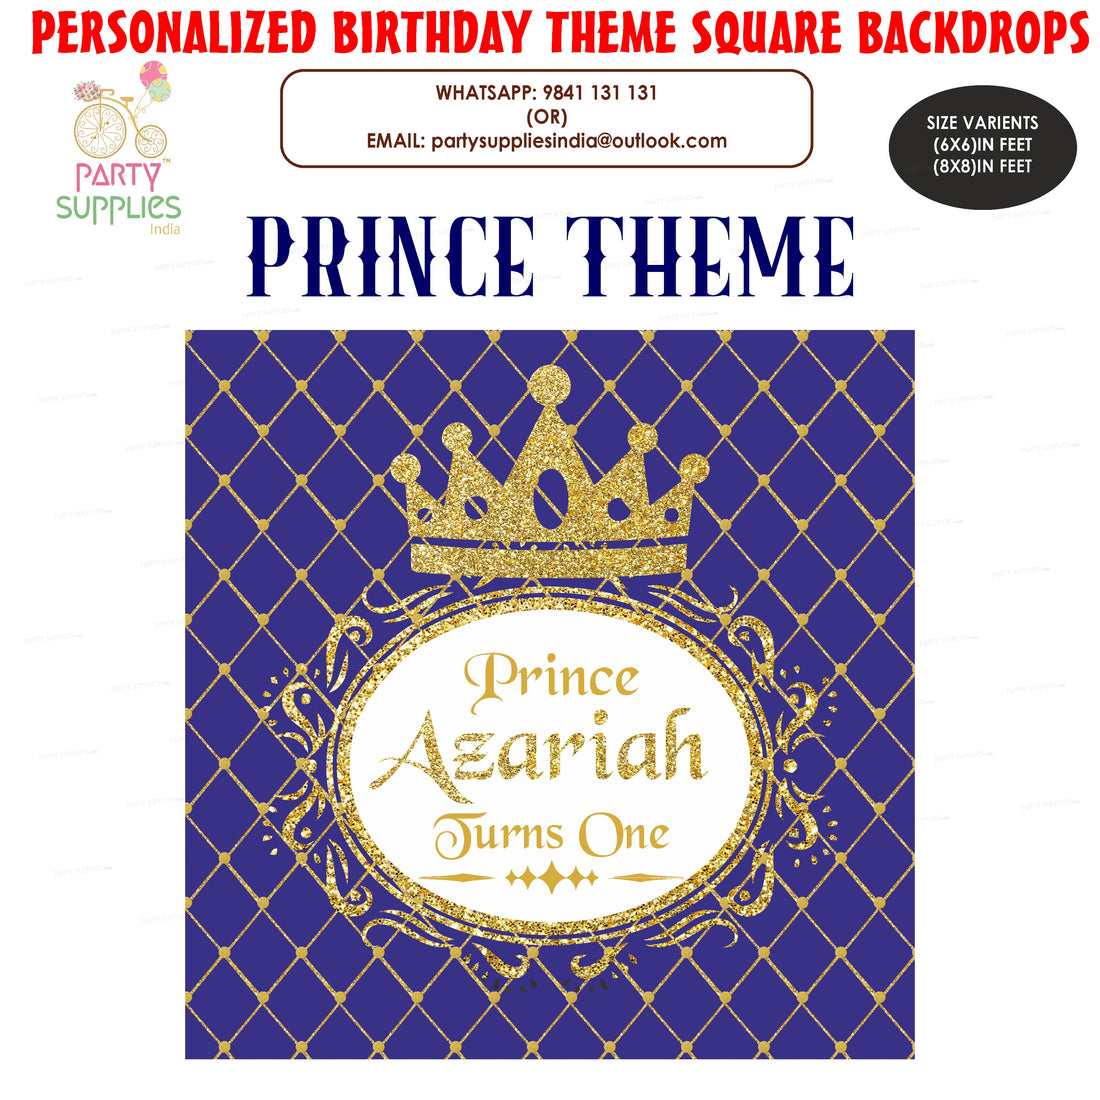 Prince Theme Personalized Square Backdrop